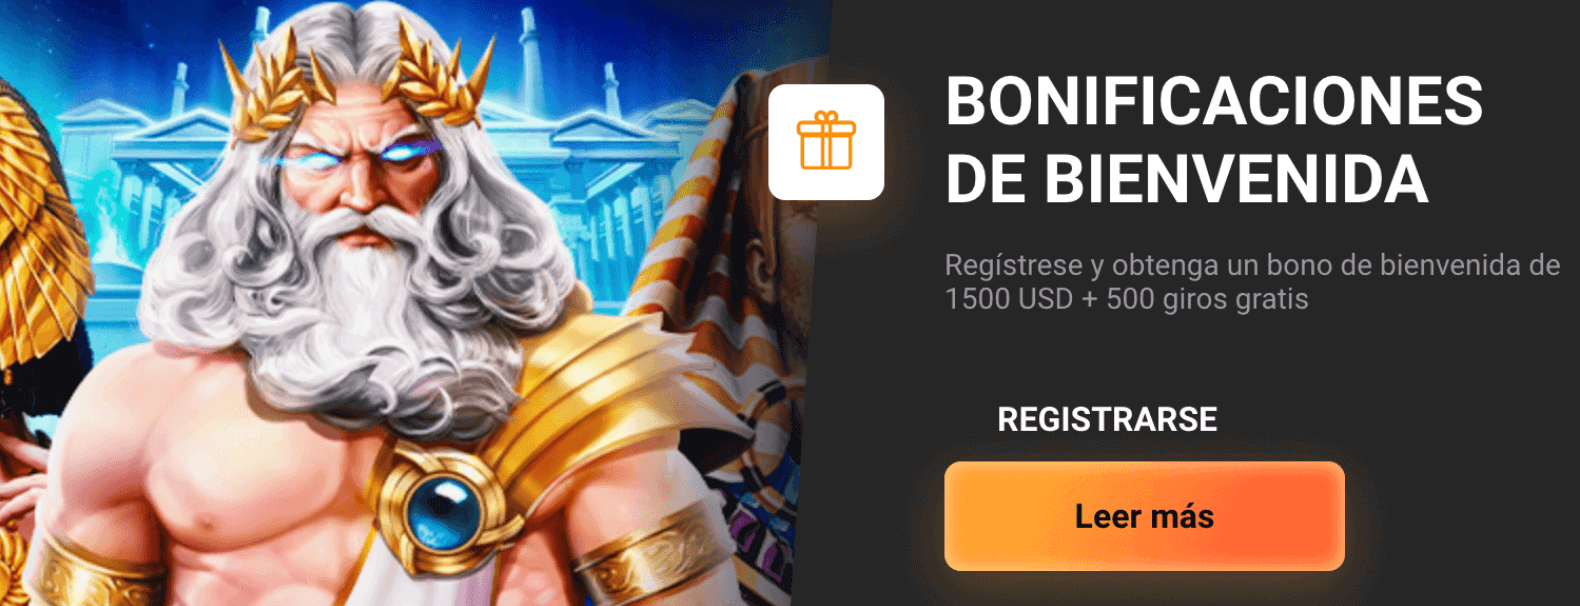 Bono bienvenida casino GGBet Chile